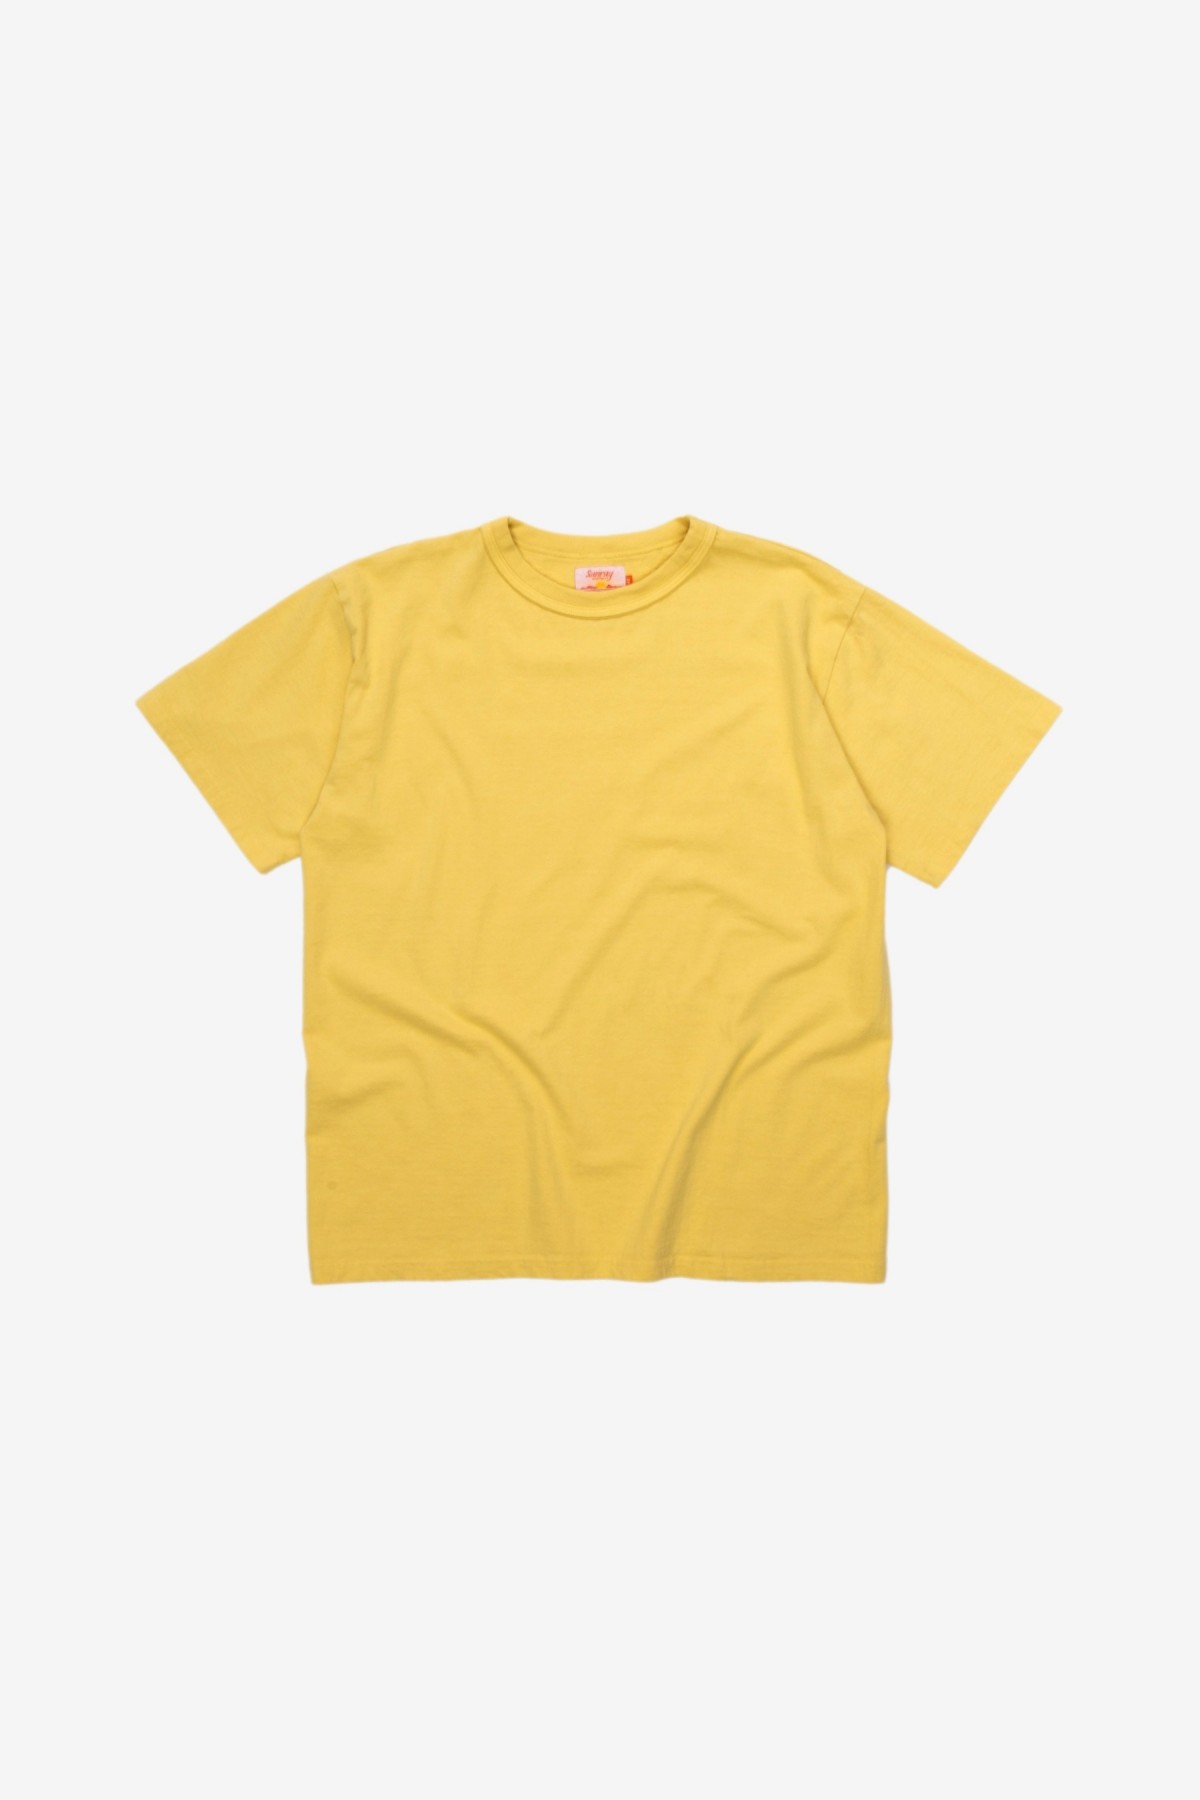 Sunray Sportswear Makaha Short Sleeve T-Shirt in Dusky Citron